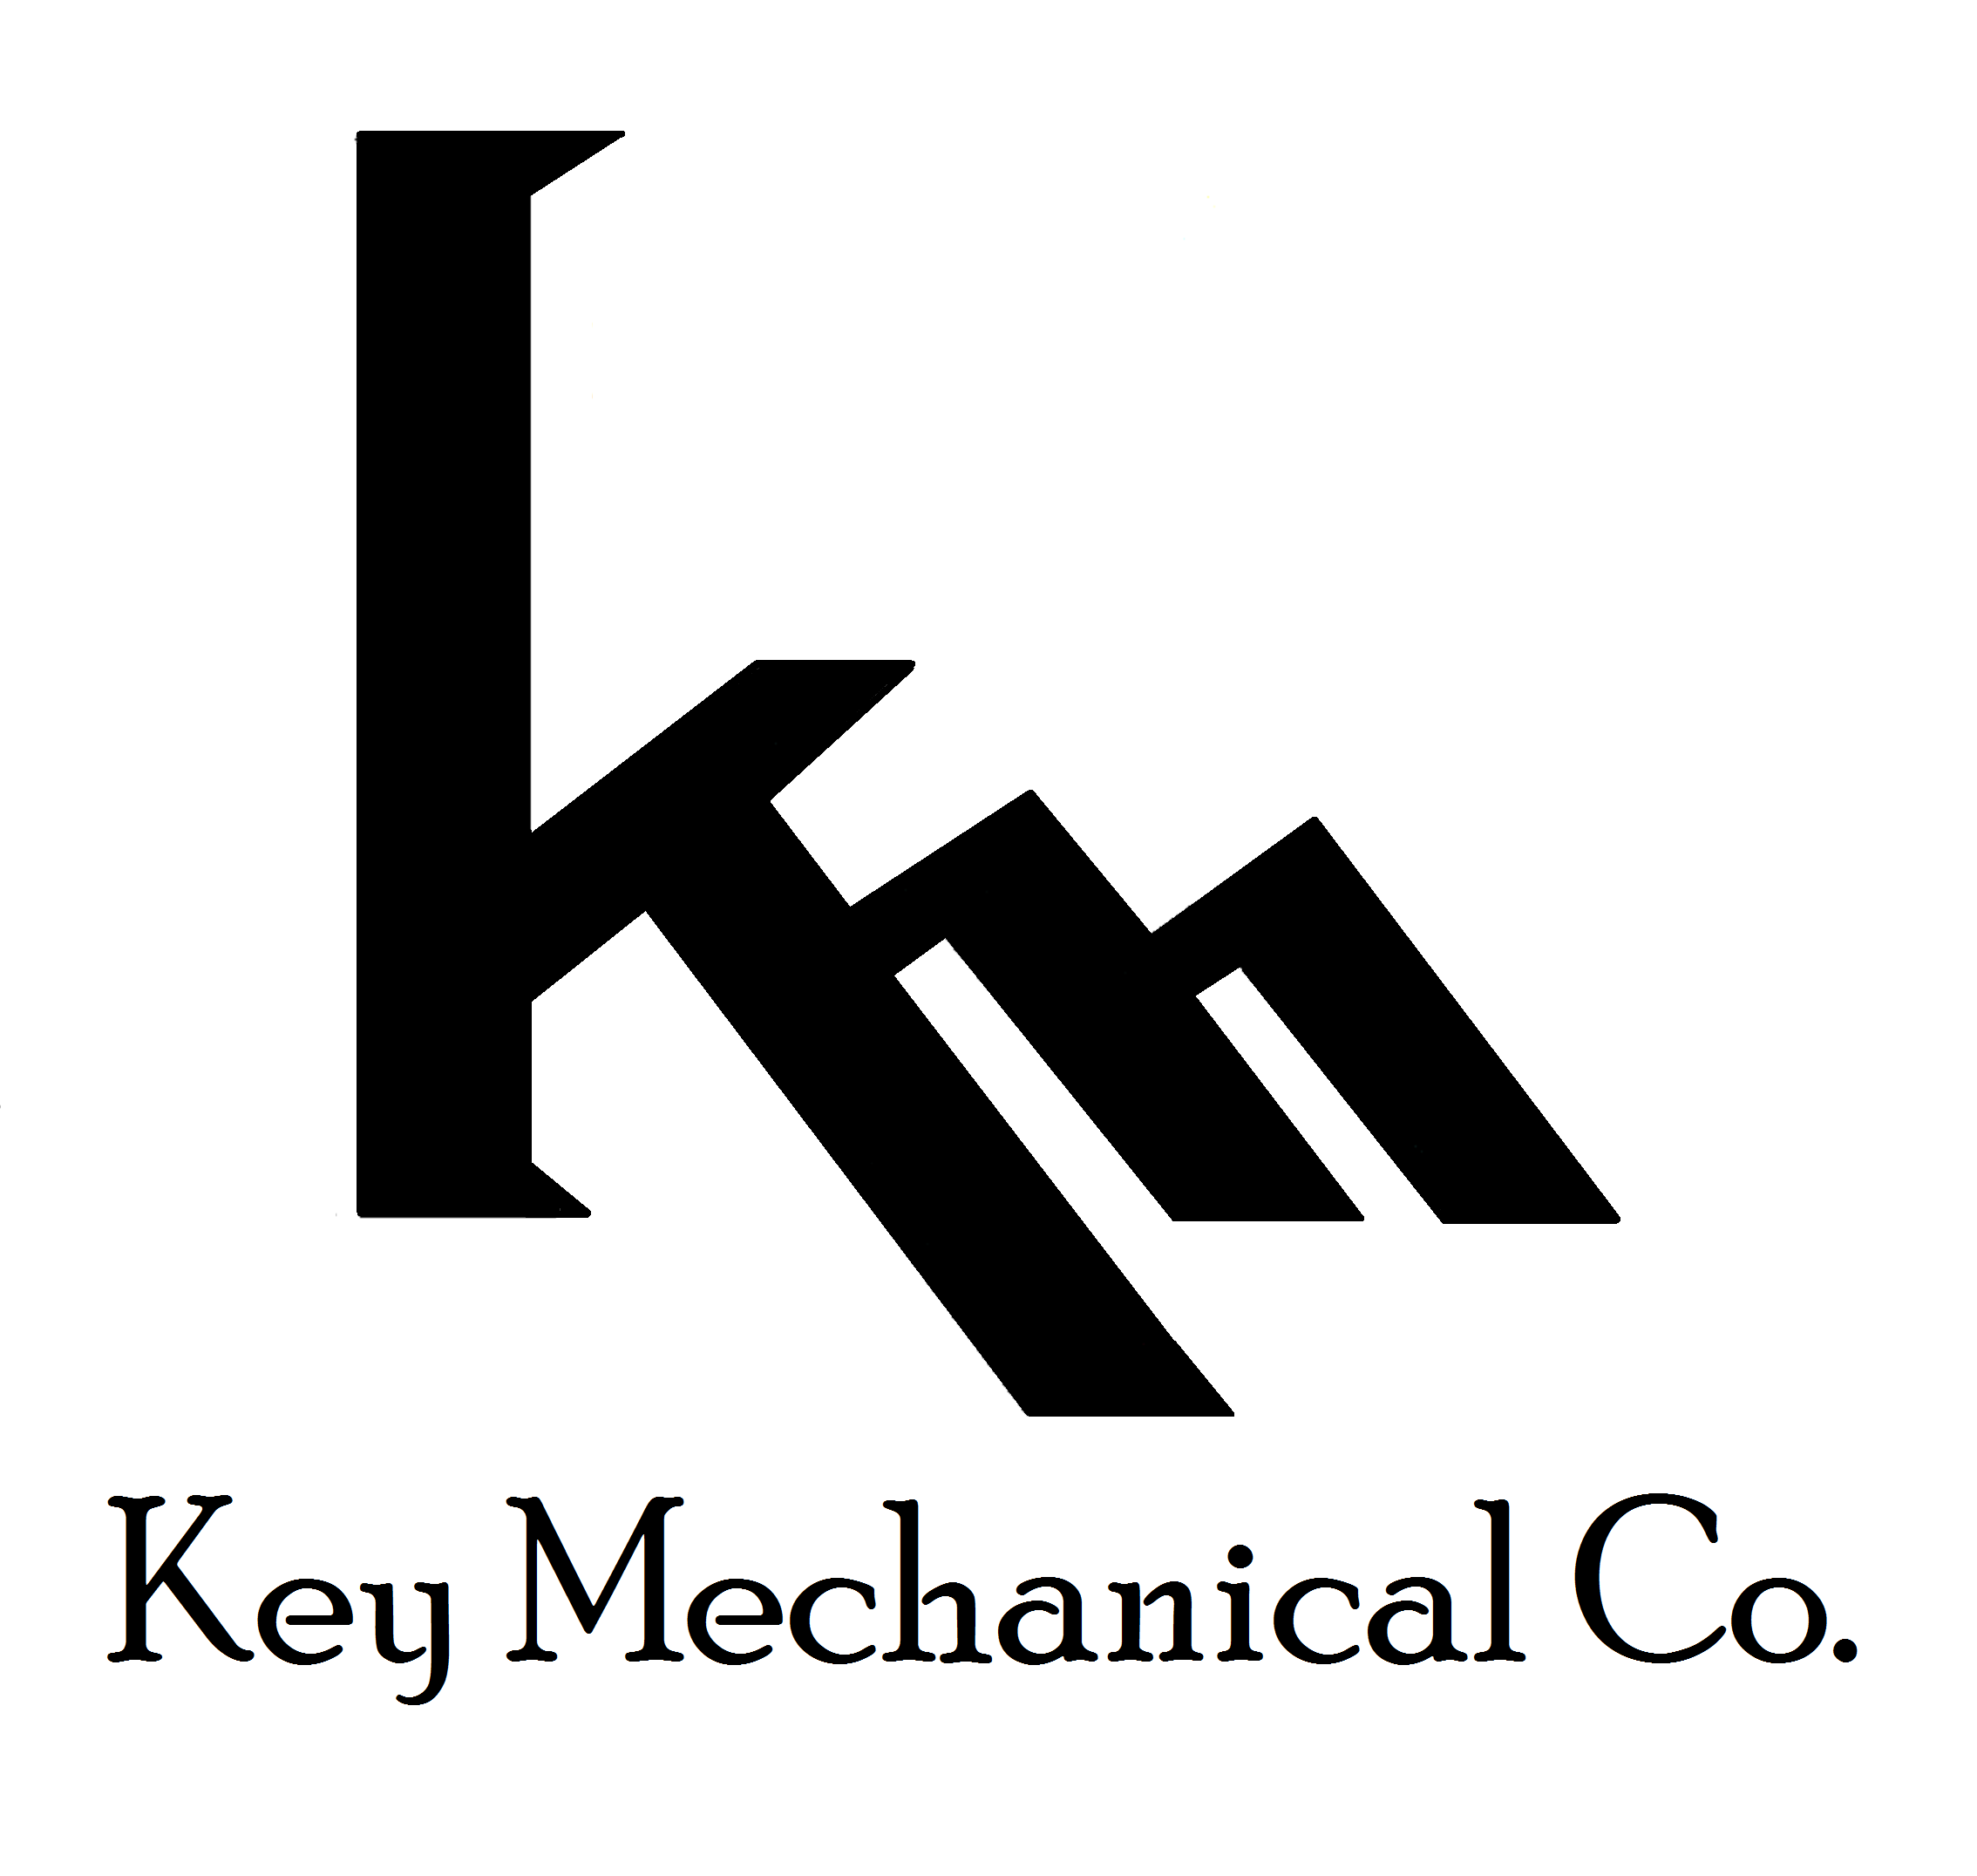 Key Mechanical Co.